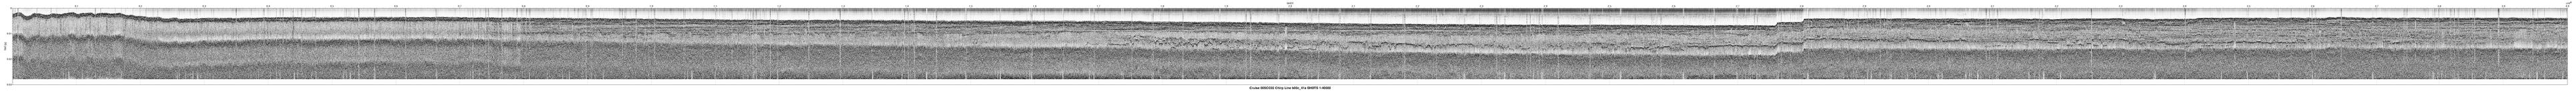 00SCC02 b00c_41a seismic profile image